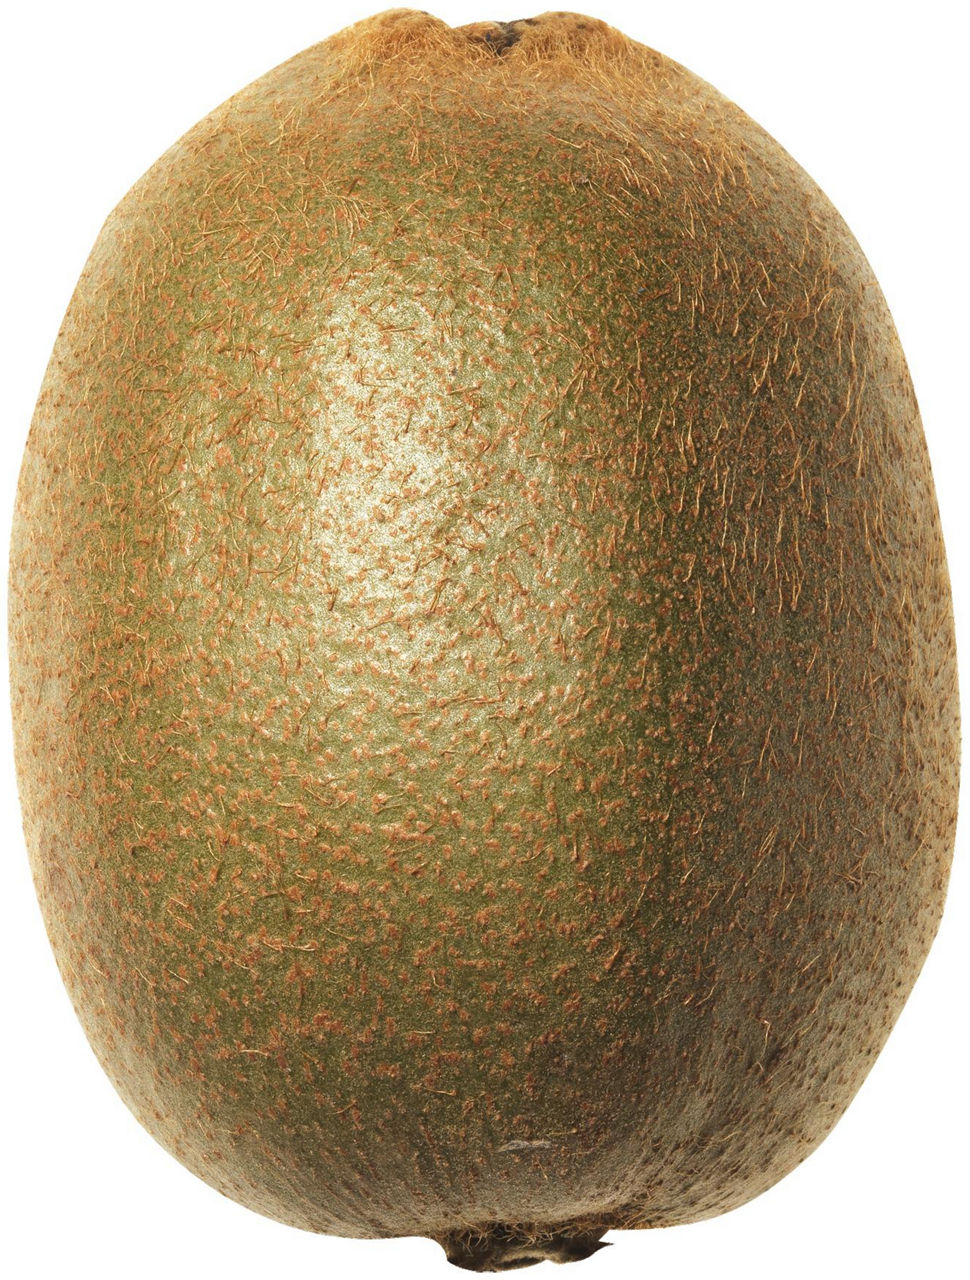 Kiwi kg 1 - 1